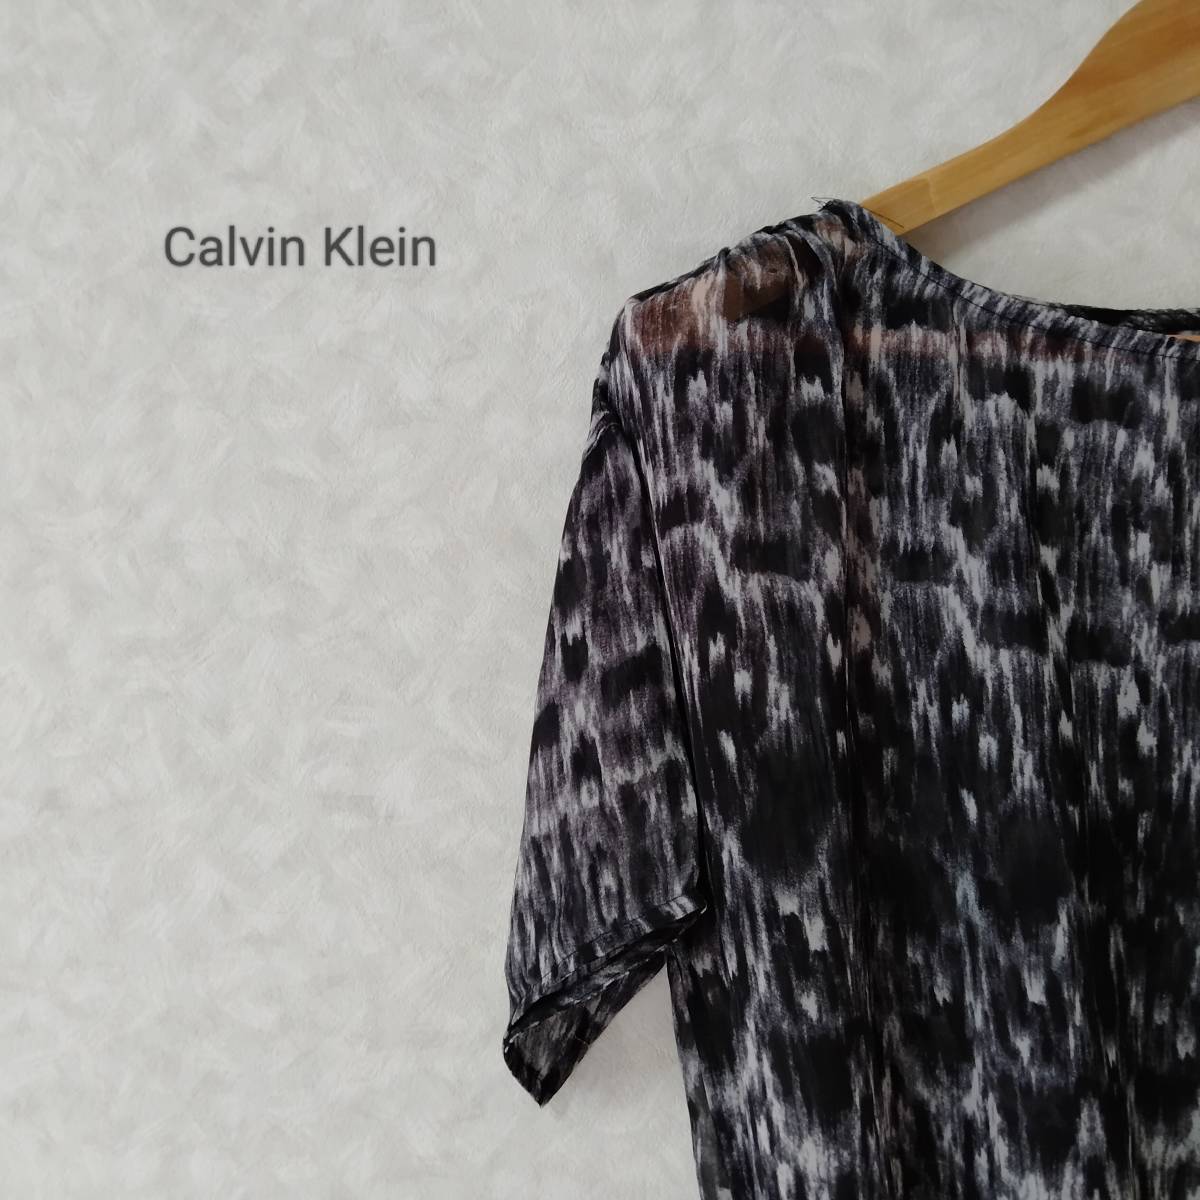 Calvin Klein カルバンクライン トップス シャツ ブラウス 絞り染め柄 シアー ラウンドネック 半袖 レディース サイズM ブラック SJJ131_画像1